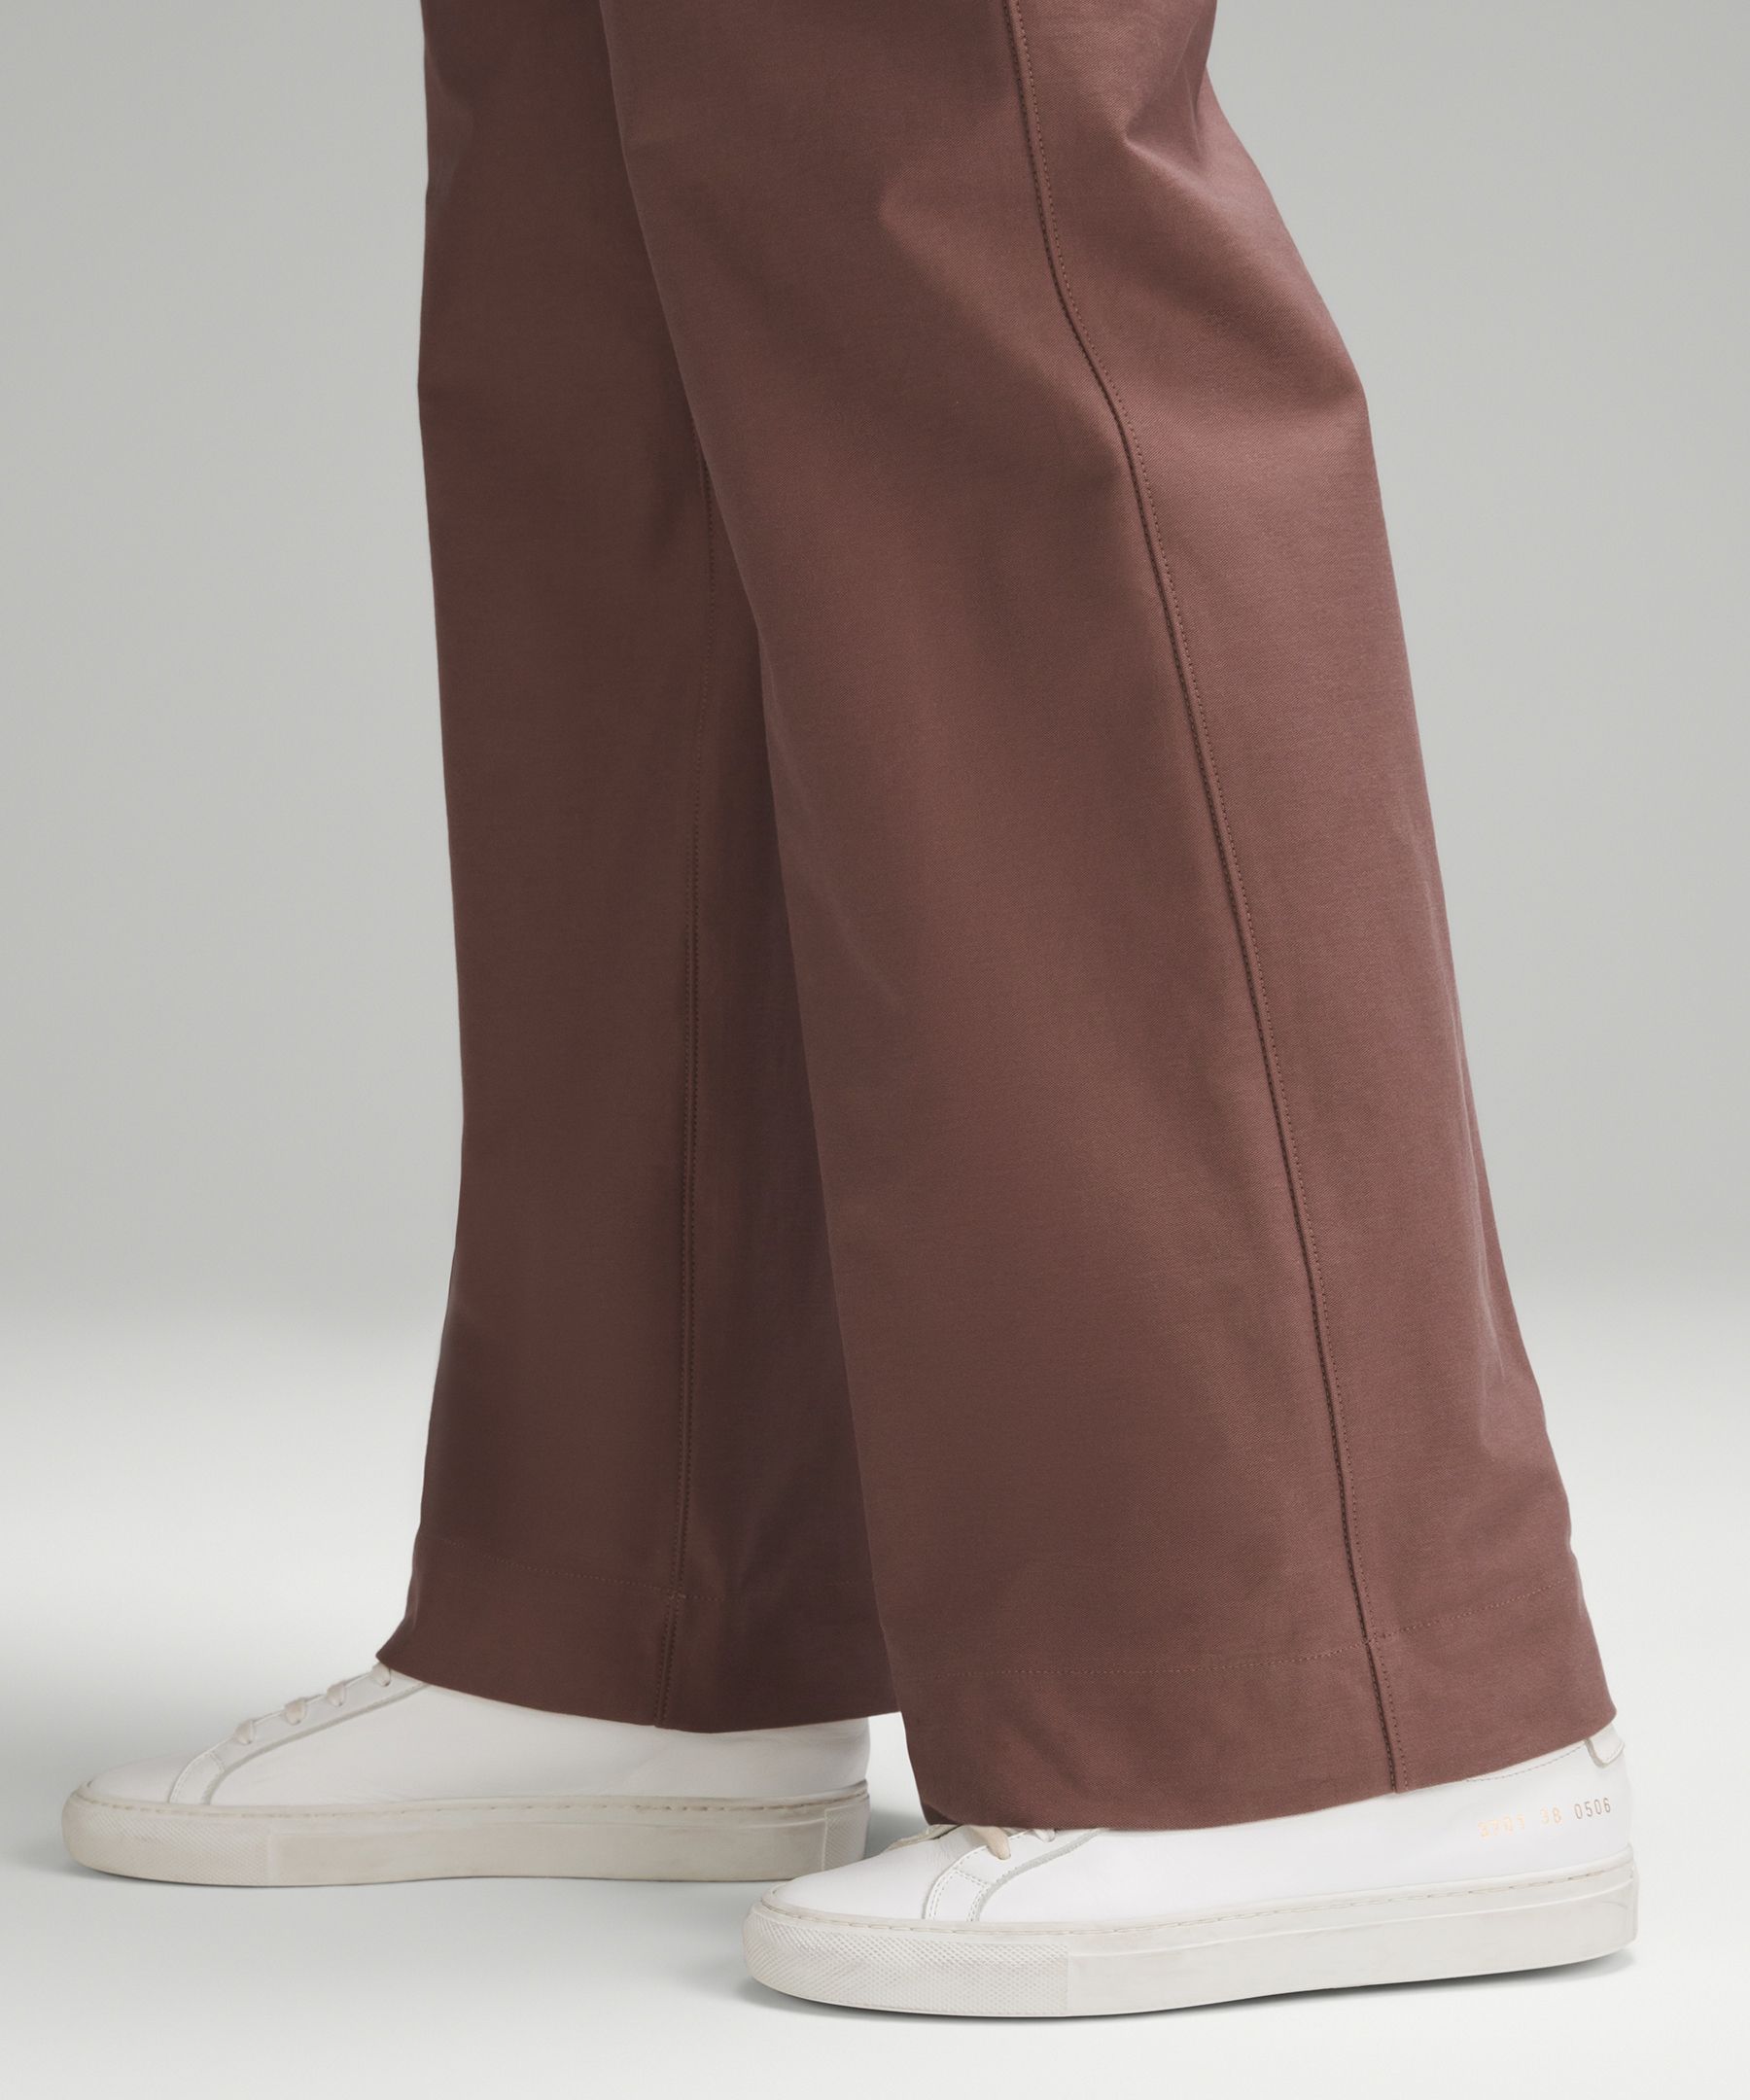 Lululemon City Sleek 5 Pocket Wide Leg Pant, Light Utilitech, Size 30